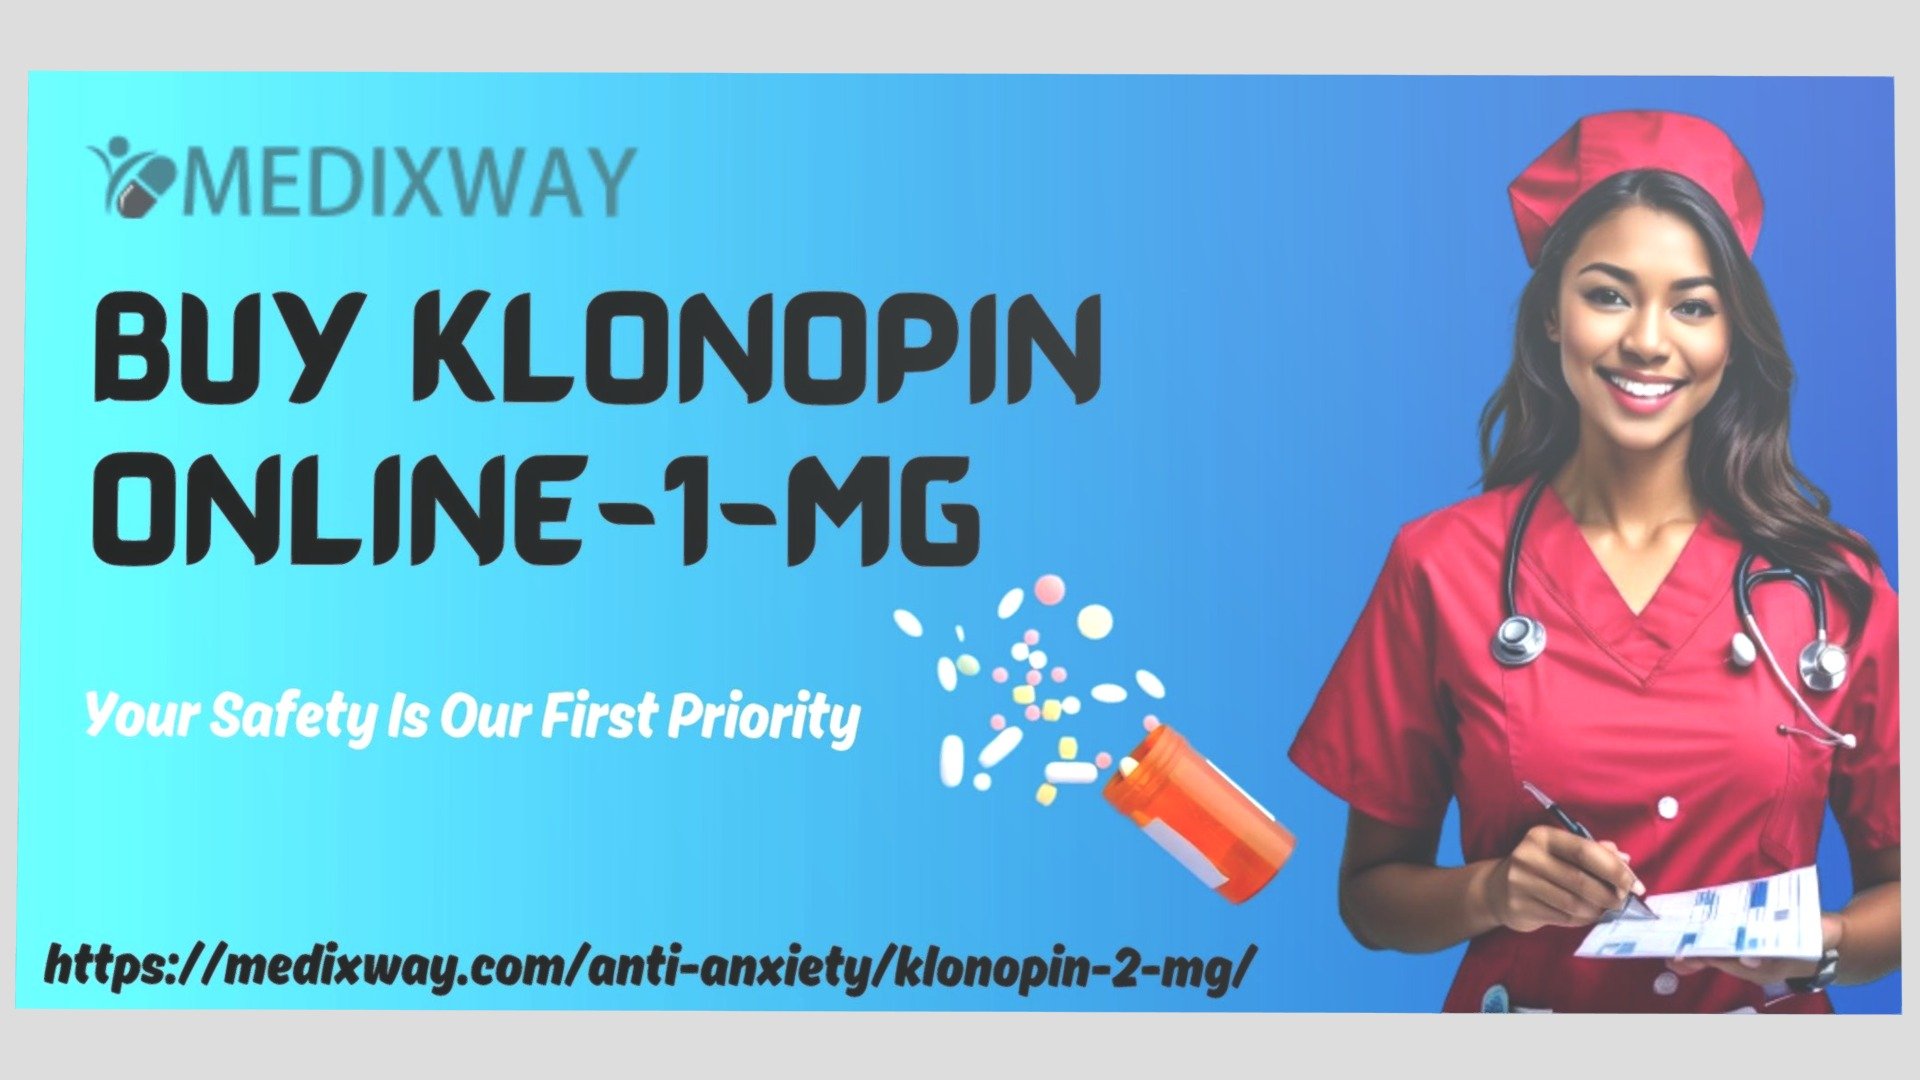 Buy Klonopin Online-1-mg - 3D model by buyklonopin-1-mg [95c6ccf] - Sketchfab